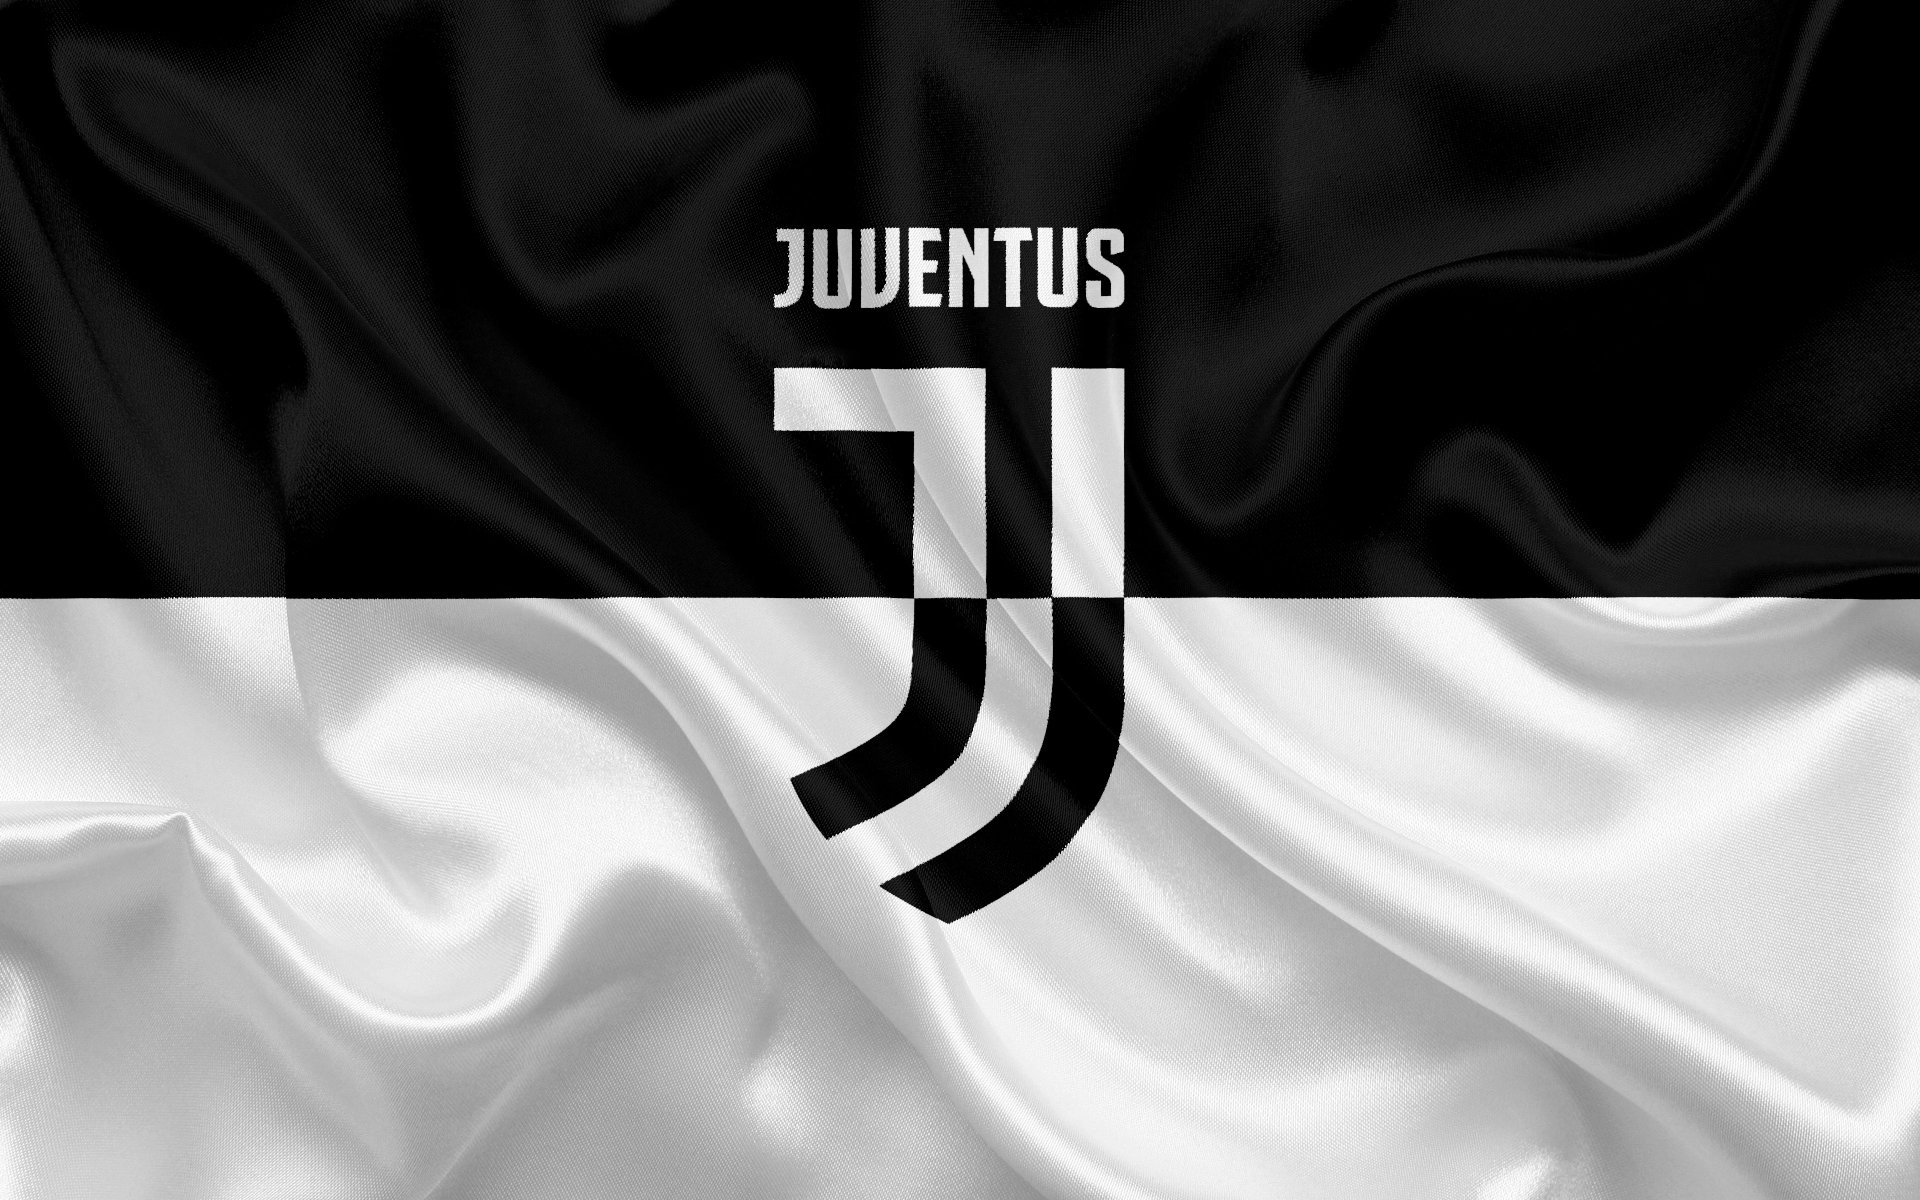 Decisione UEFA: Juventus, possibili esclusioni competizioni europee